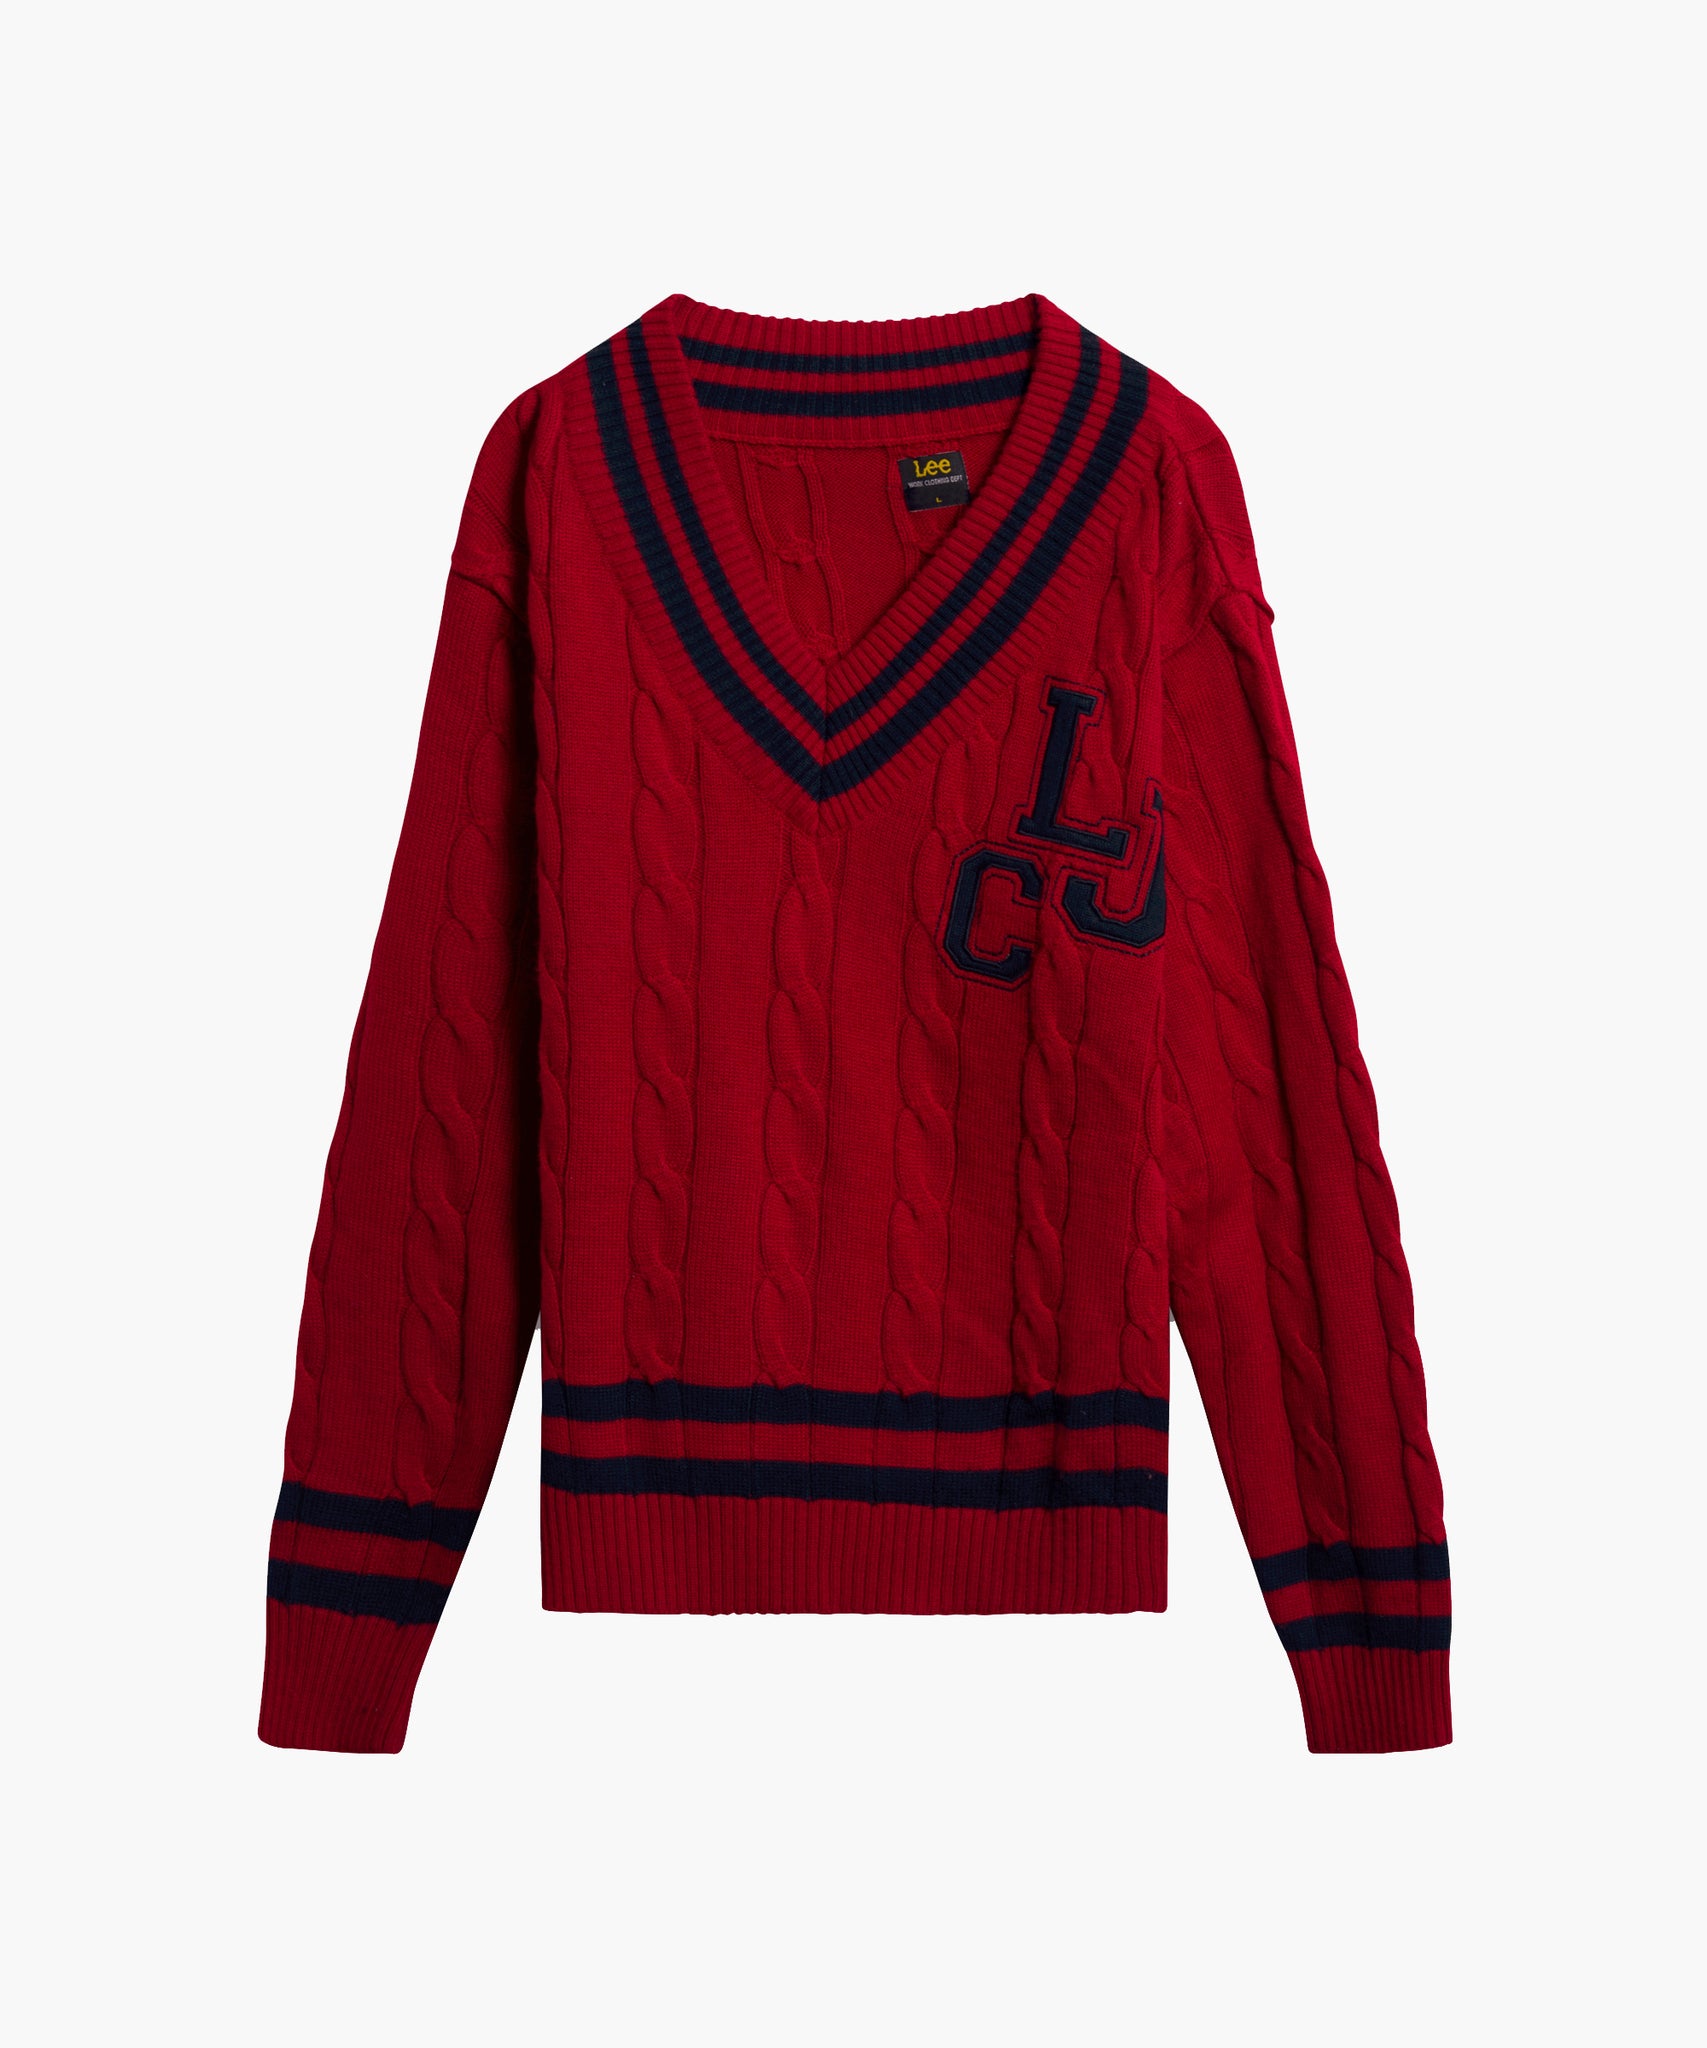 Lee Crochet Deep Cut Sweater - Red